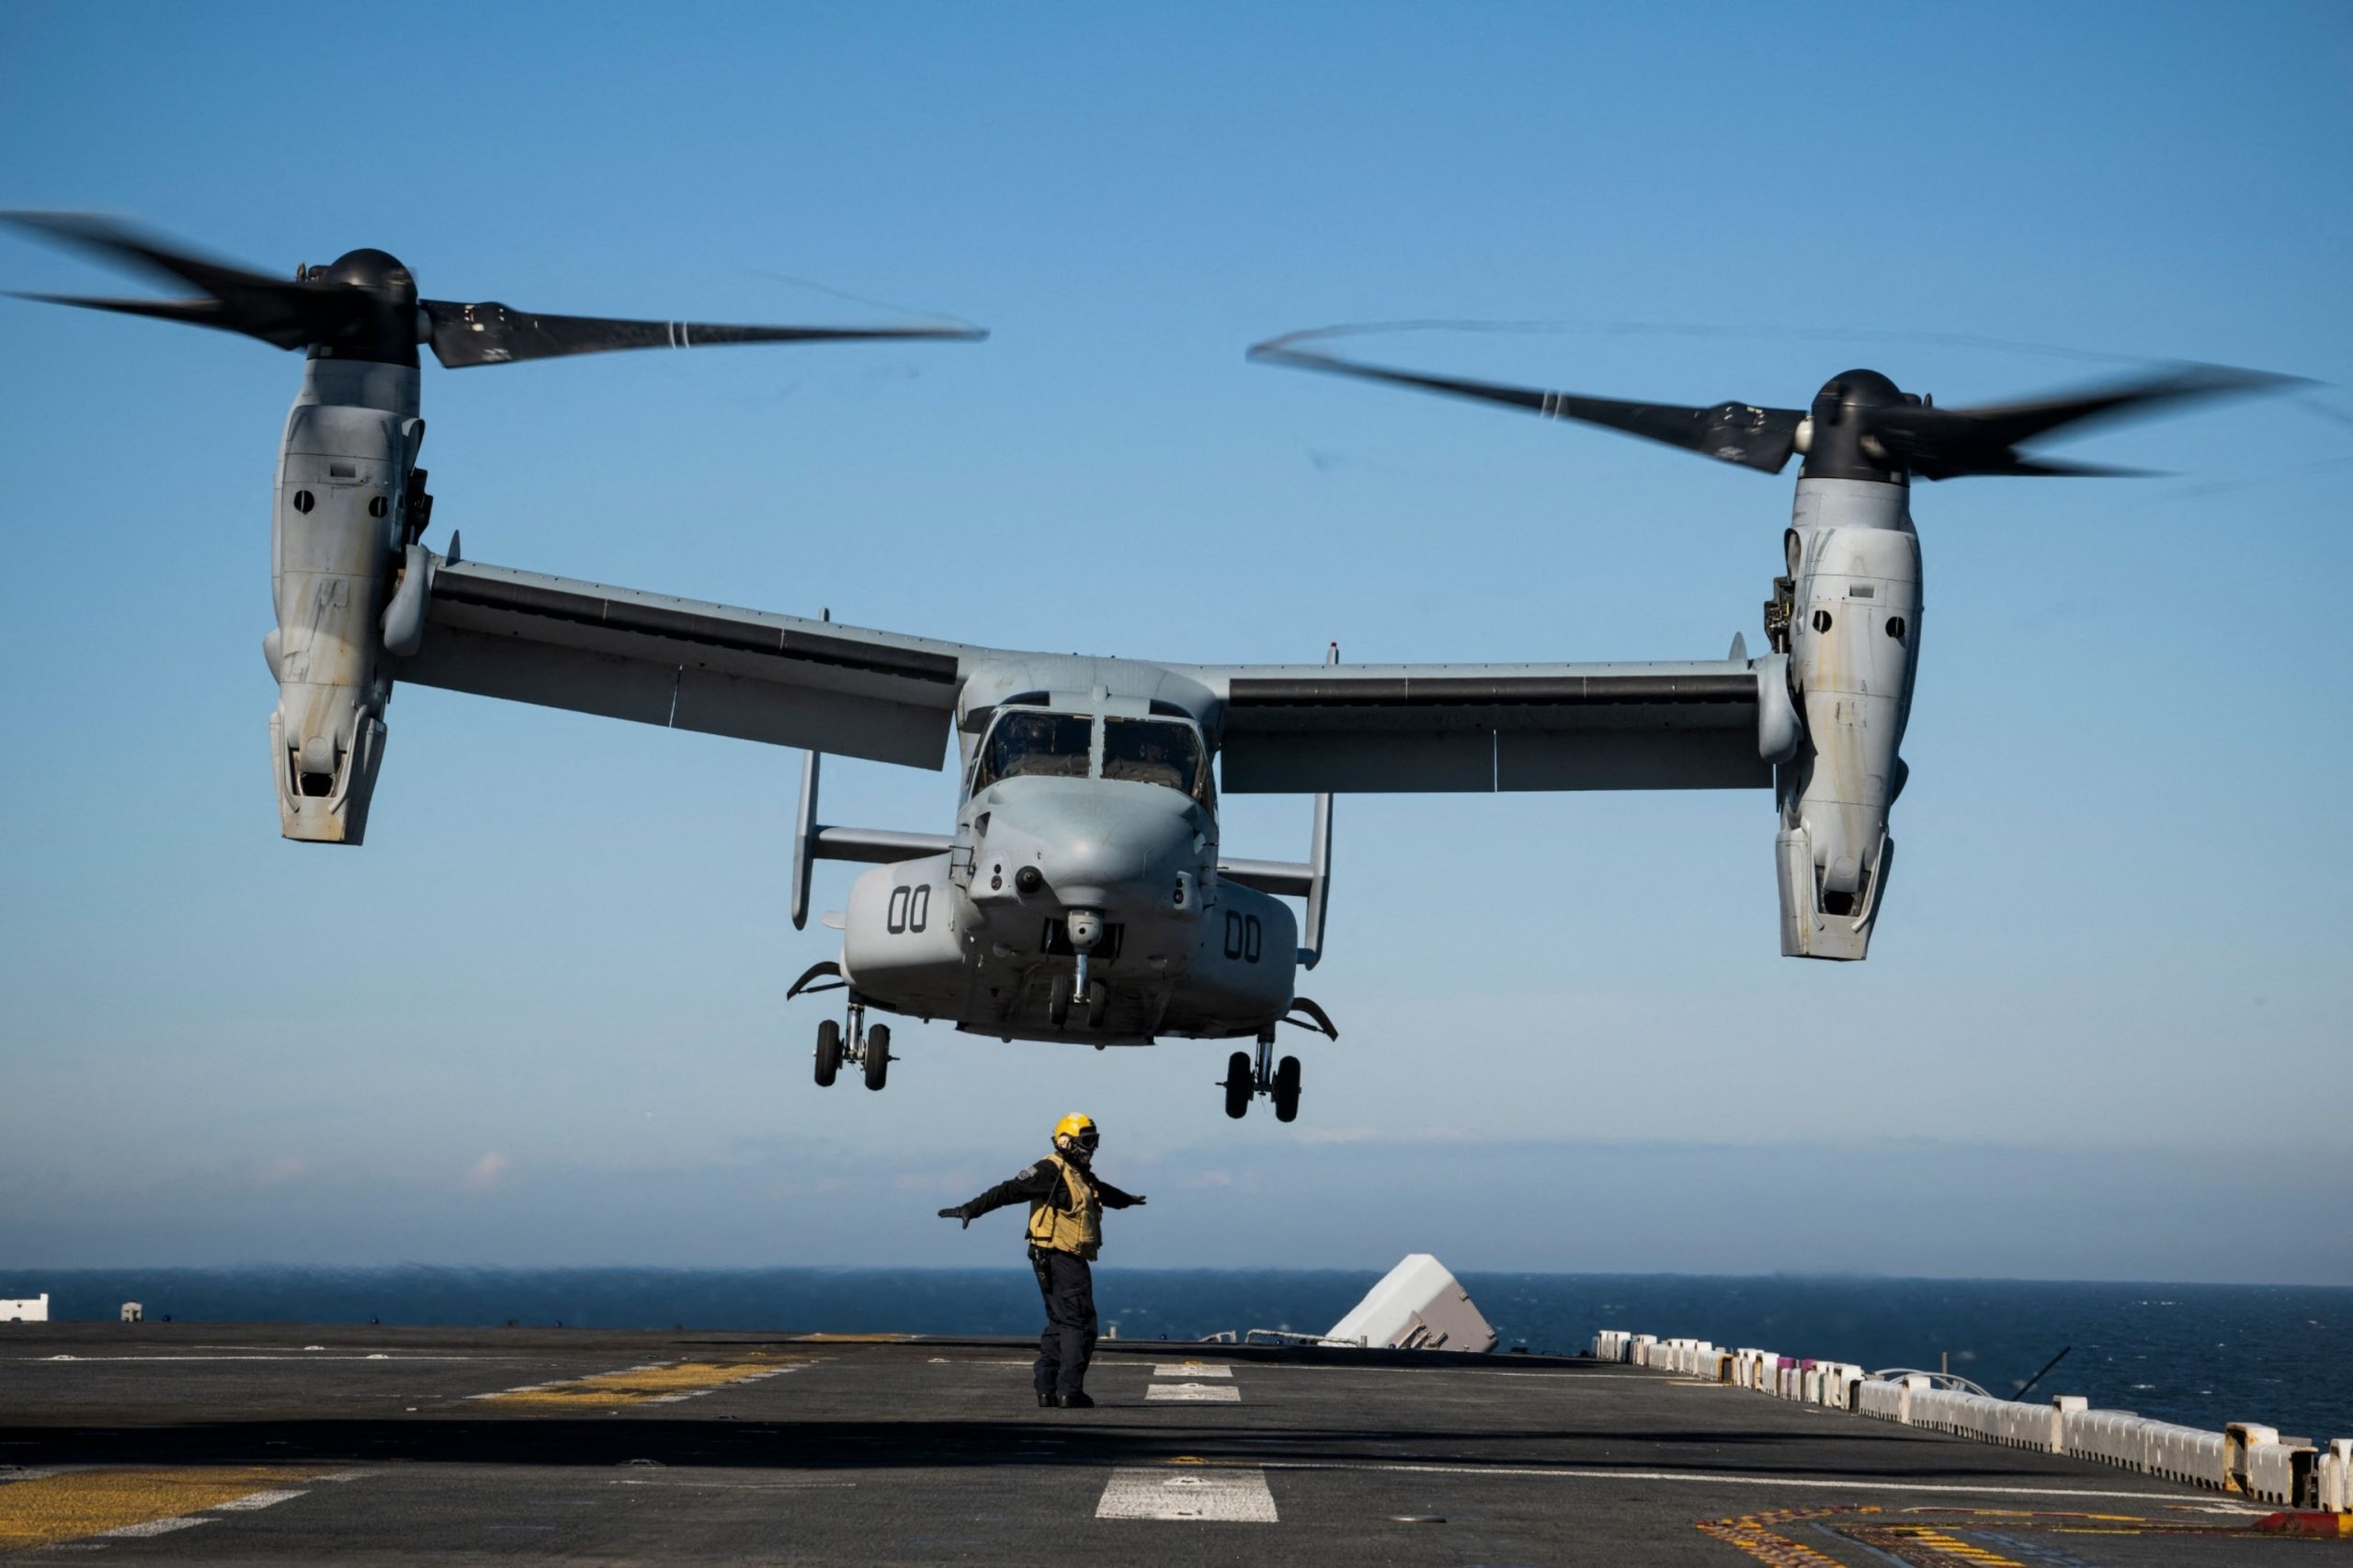 Pentagon announces lifting of grounding order on V-22 Osprey aircraft following fatal crash 3 months ago